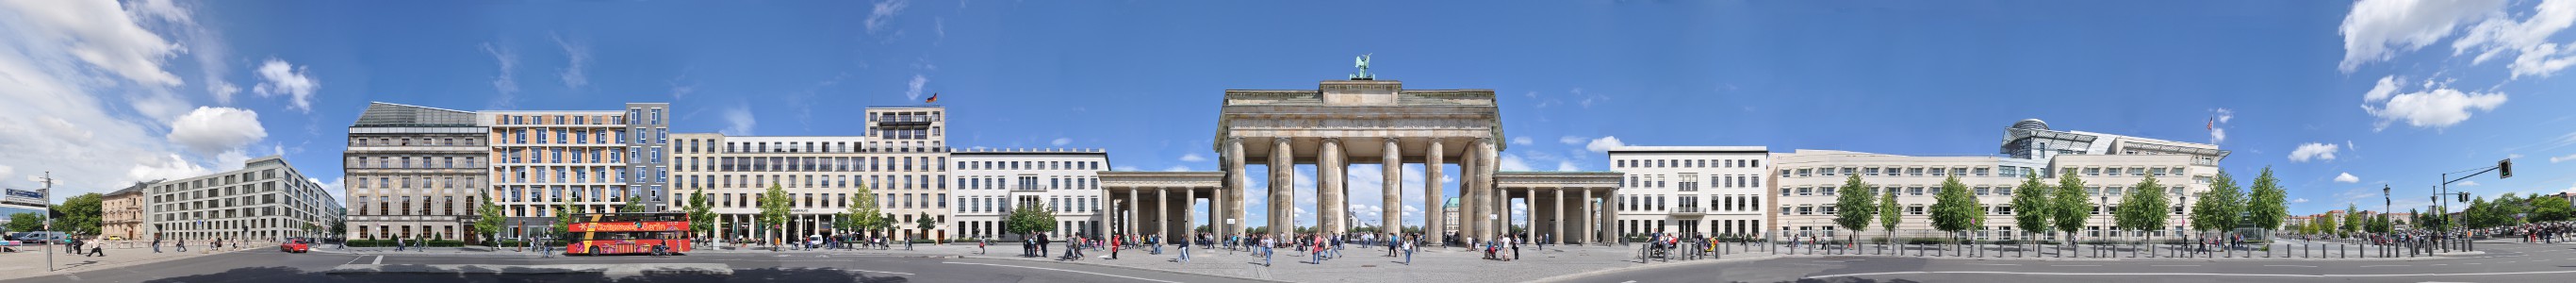 Brandenburg Gate - Ebertstrasse